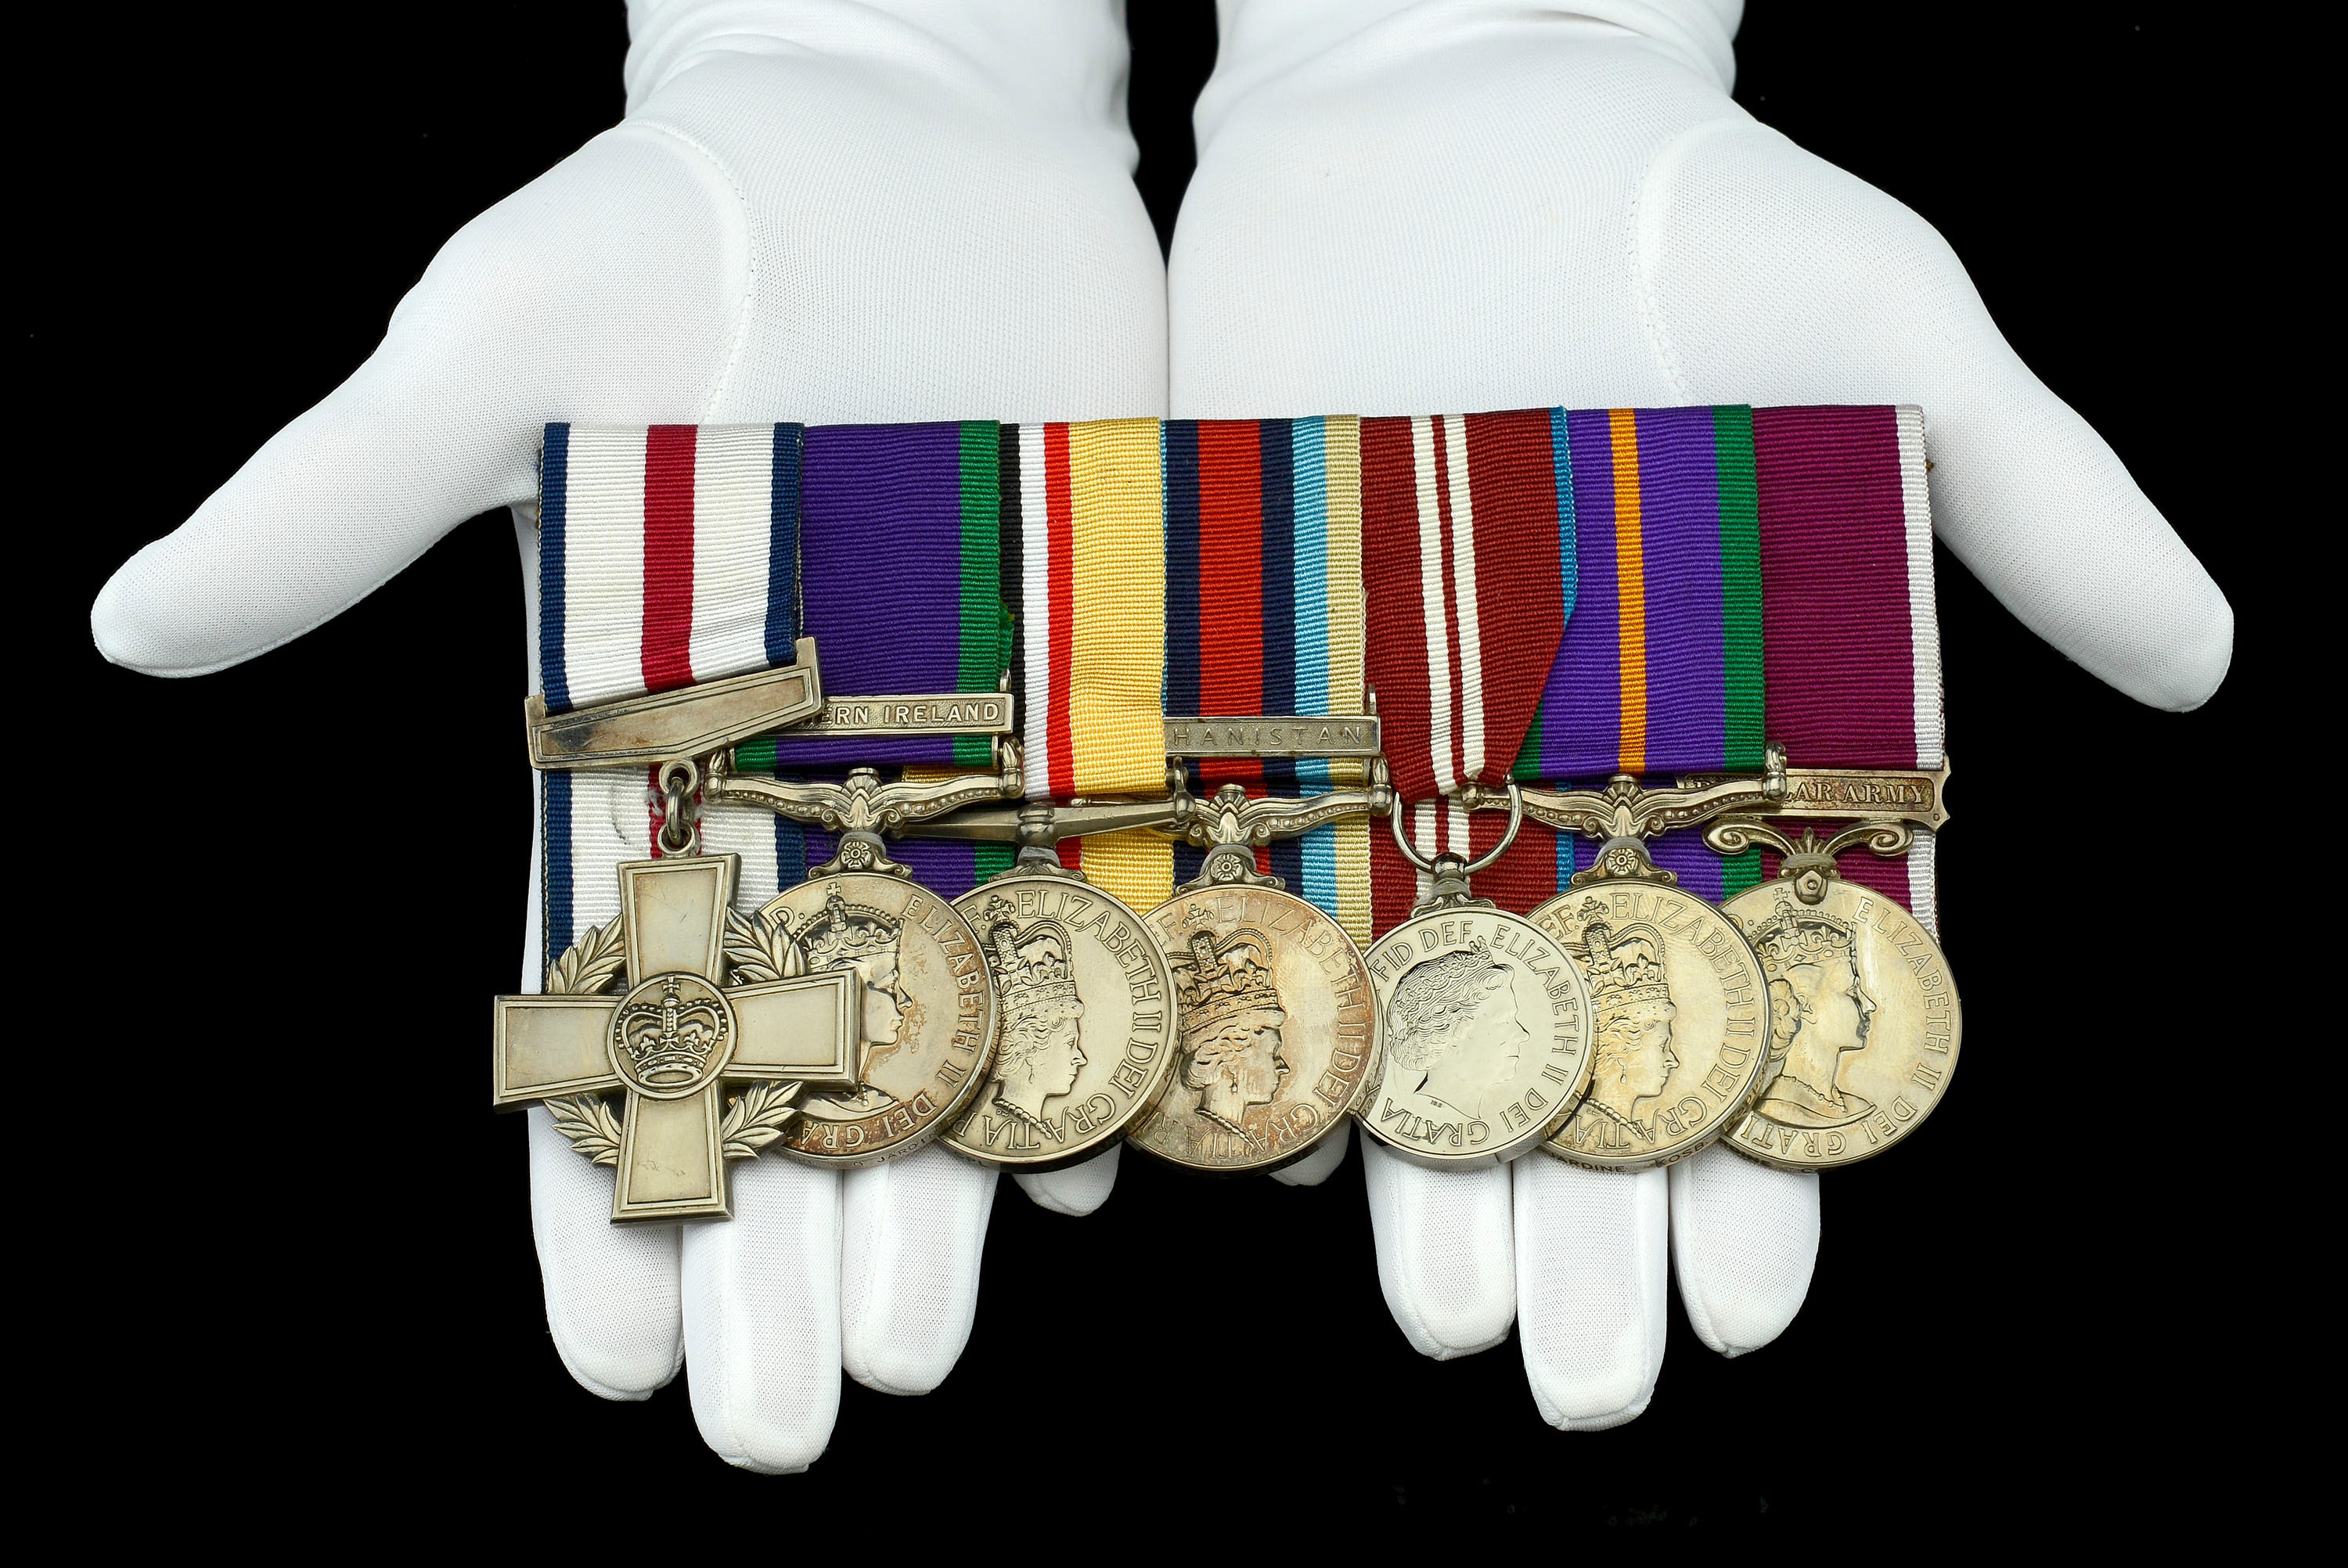 Shaun Garry Jardine ‘s medals including the CGC, far left.